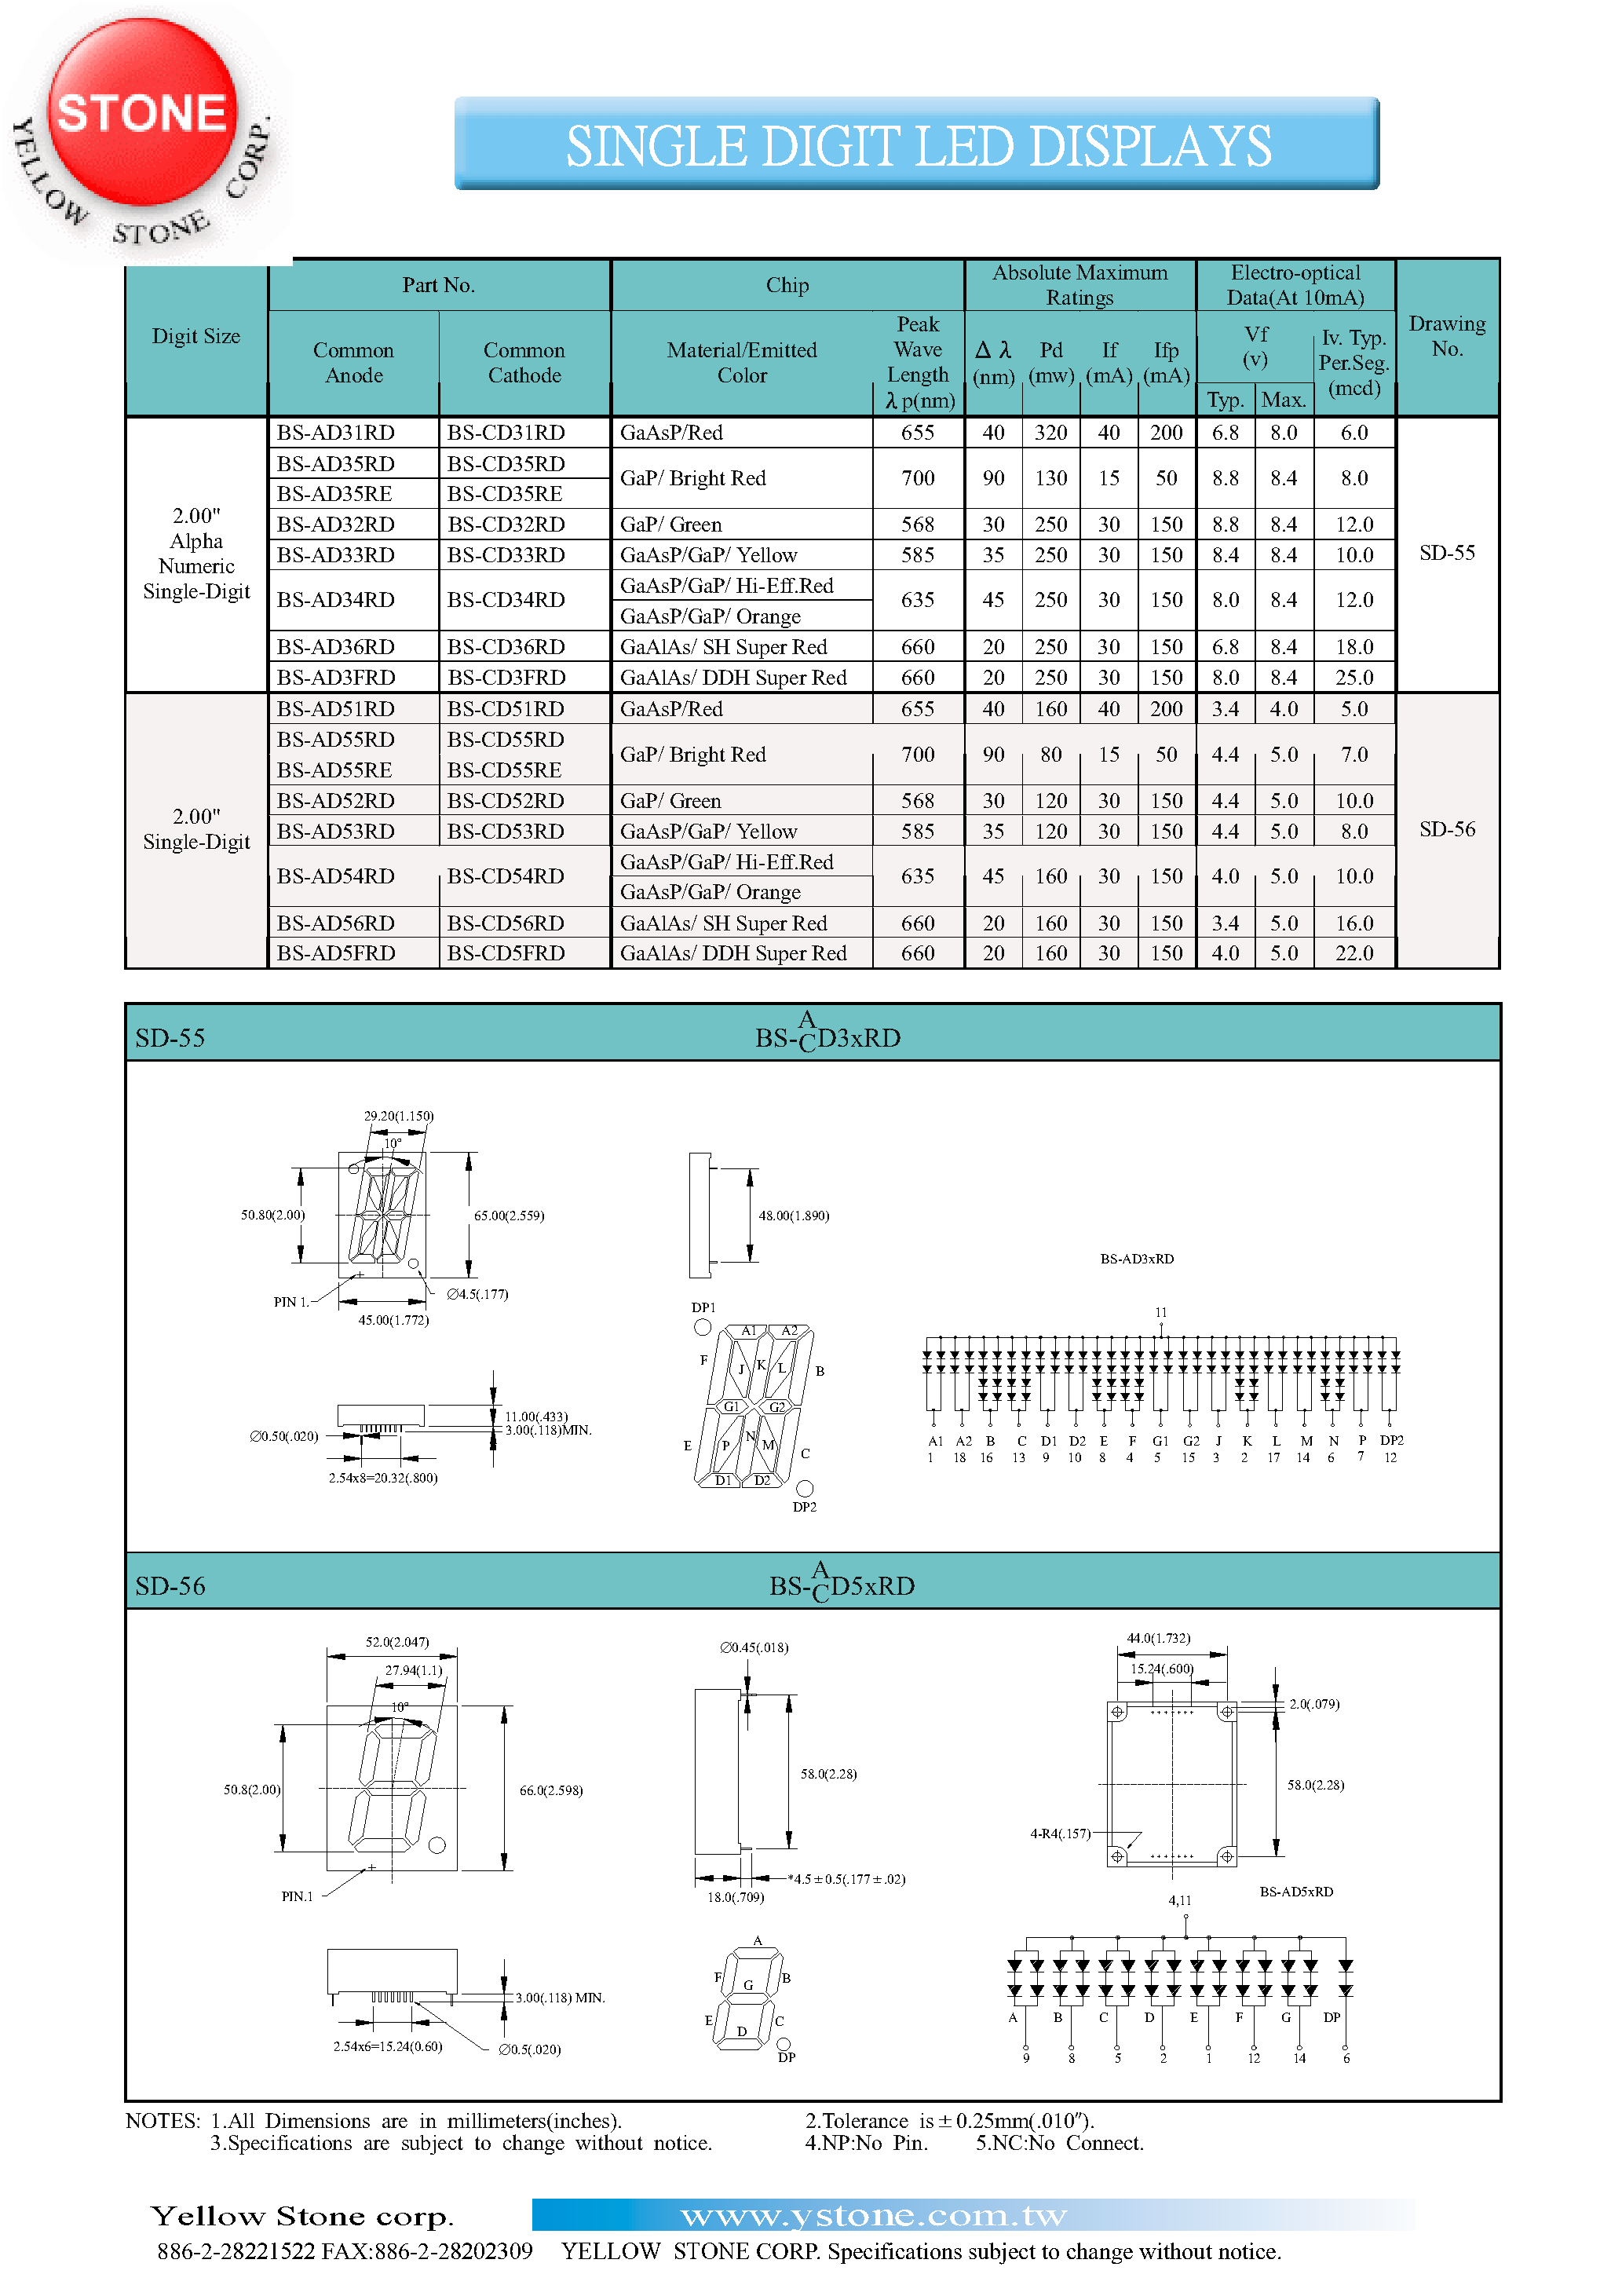 Datasheet BS-AD33RD - SINGLE DIGIT LED DISPLAYS page 1